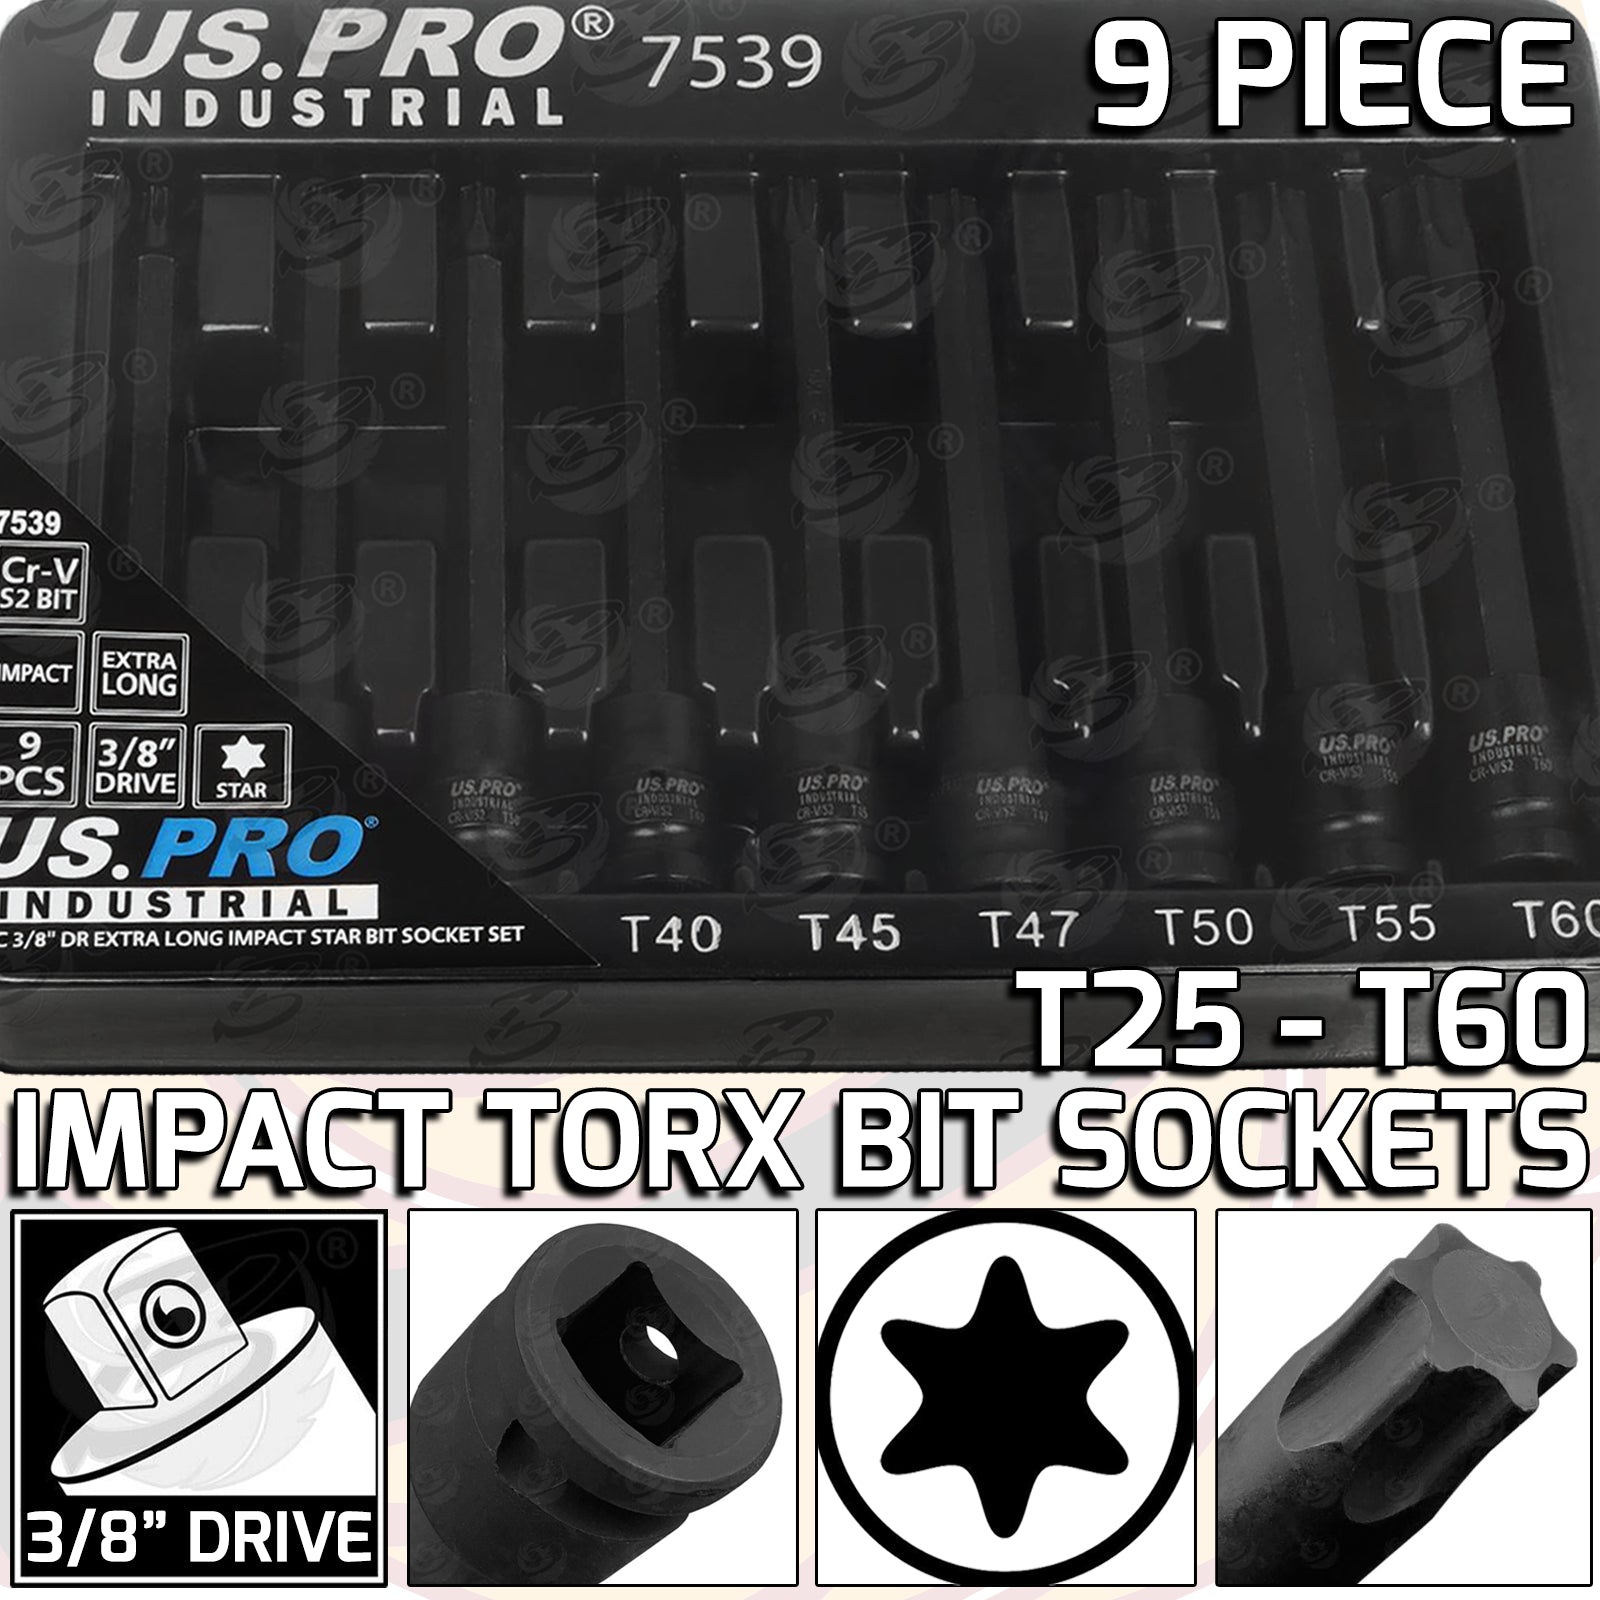 US PRO INDUSTRIAL 9PCS 3/8" DRIVE EXTRA LONG IMPACT TORX BIT SOCKETS T25 - T70